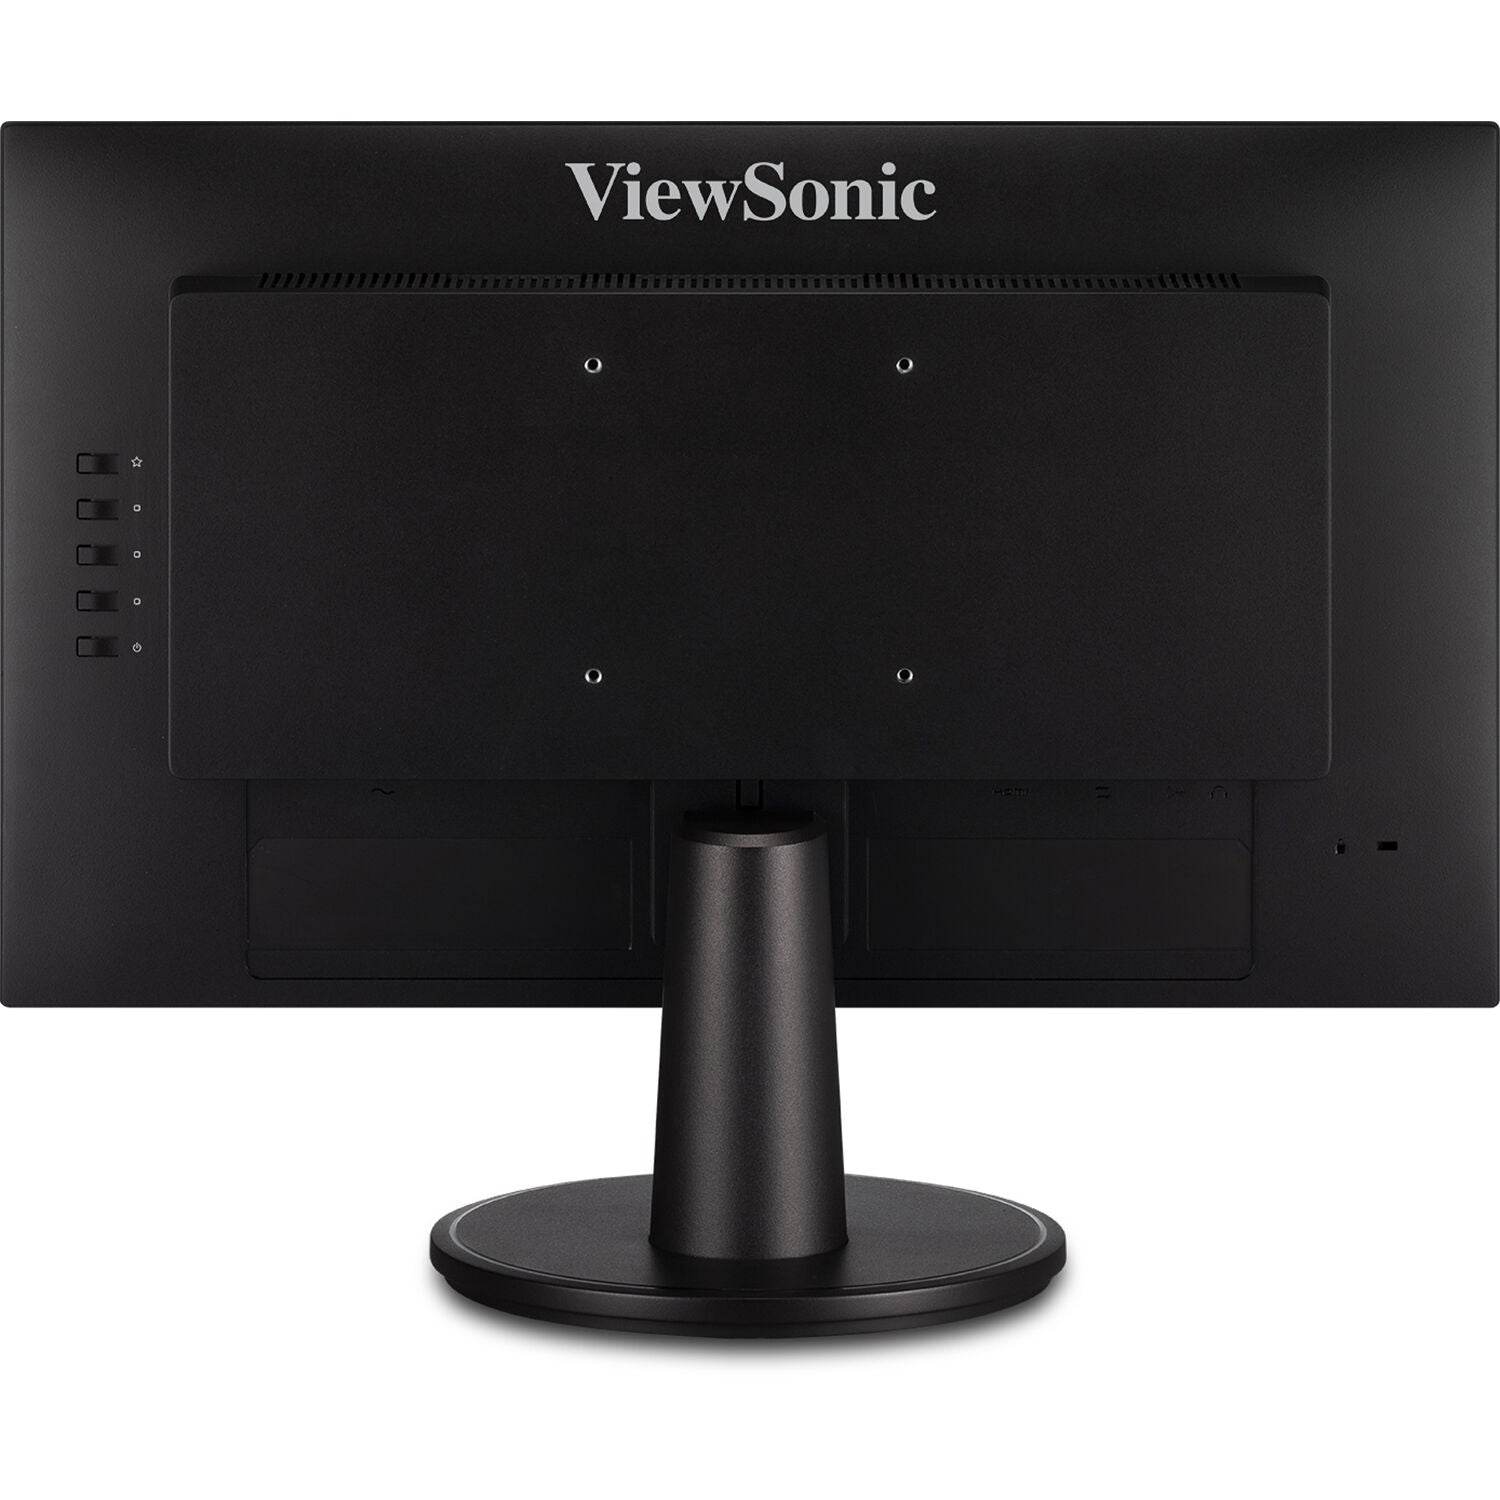 ViewSonic VS2247-MH-R 22" 1080p Monitor - C Grade Refurbished